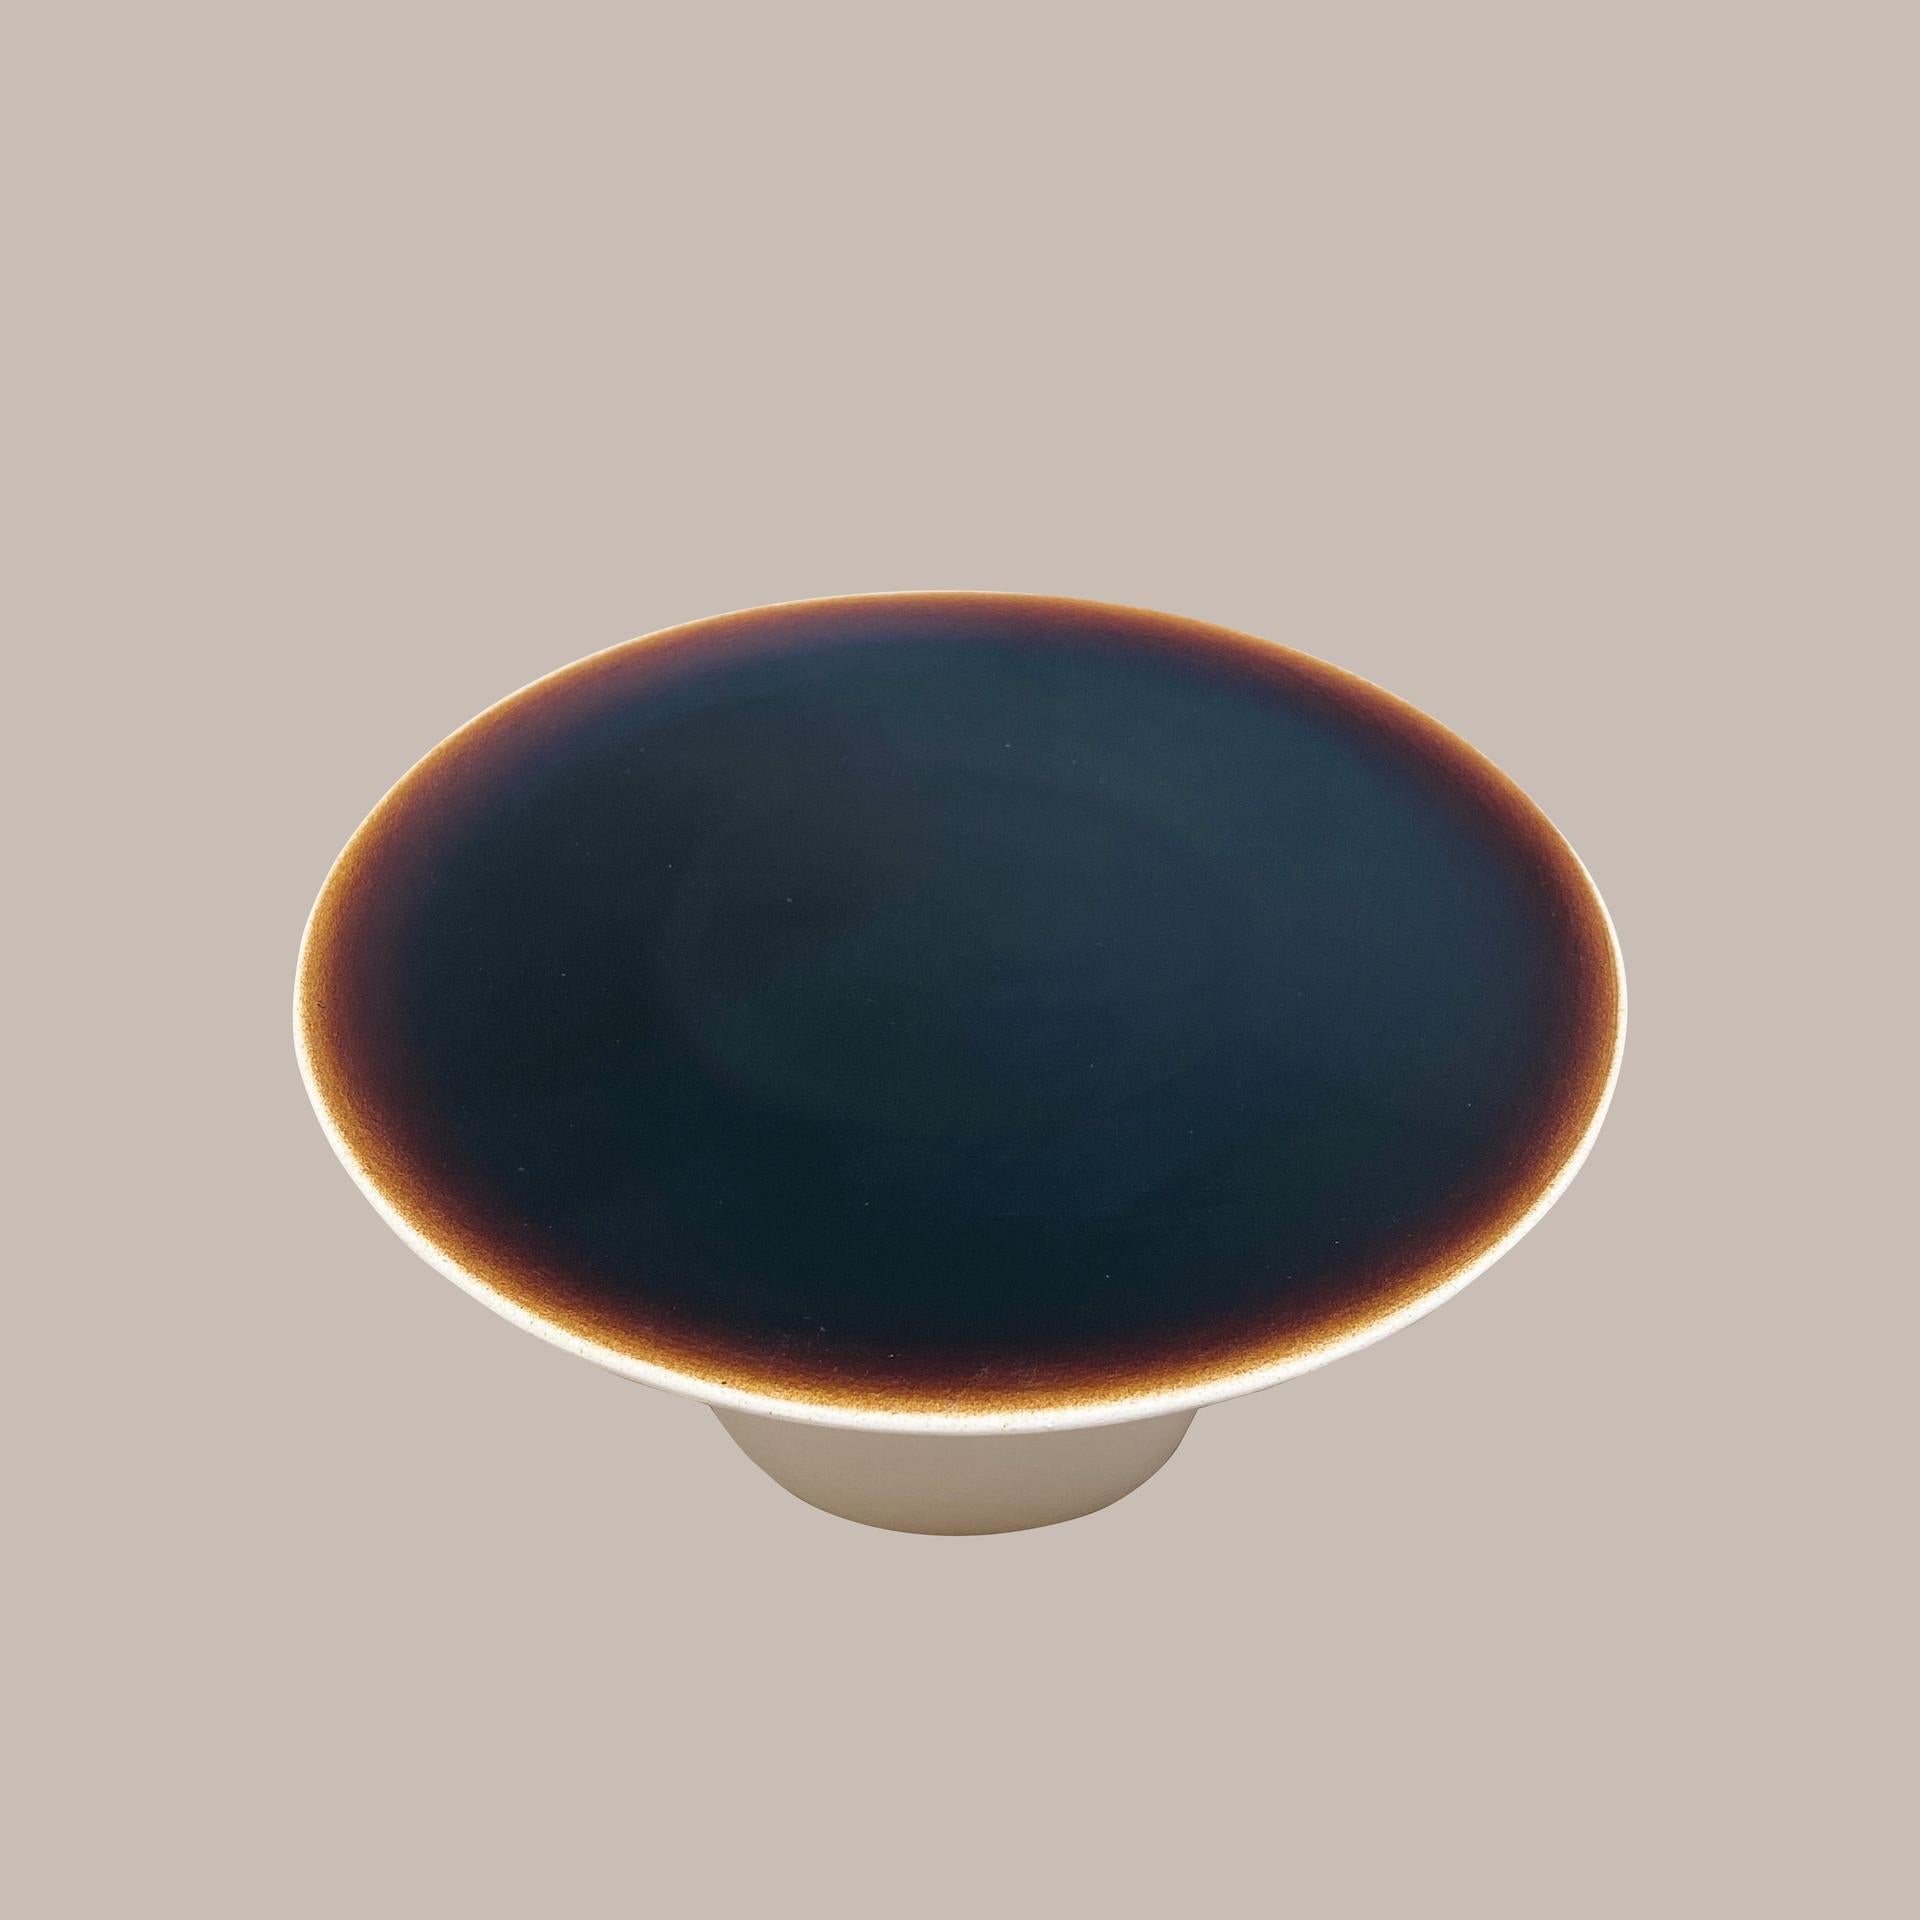 Ott Another Paradigmatic Handmade Ceramic Vase by Studio Yoon Seok-Hyeon For Sale 2